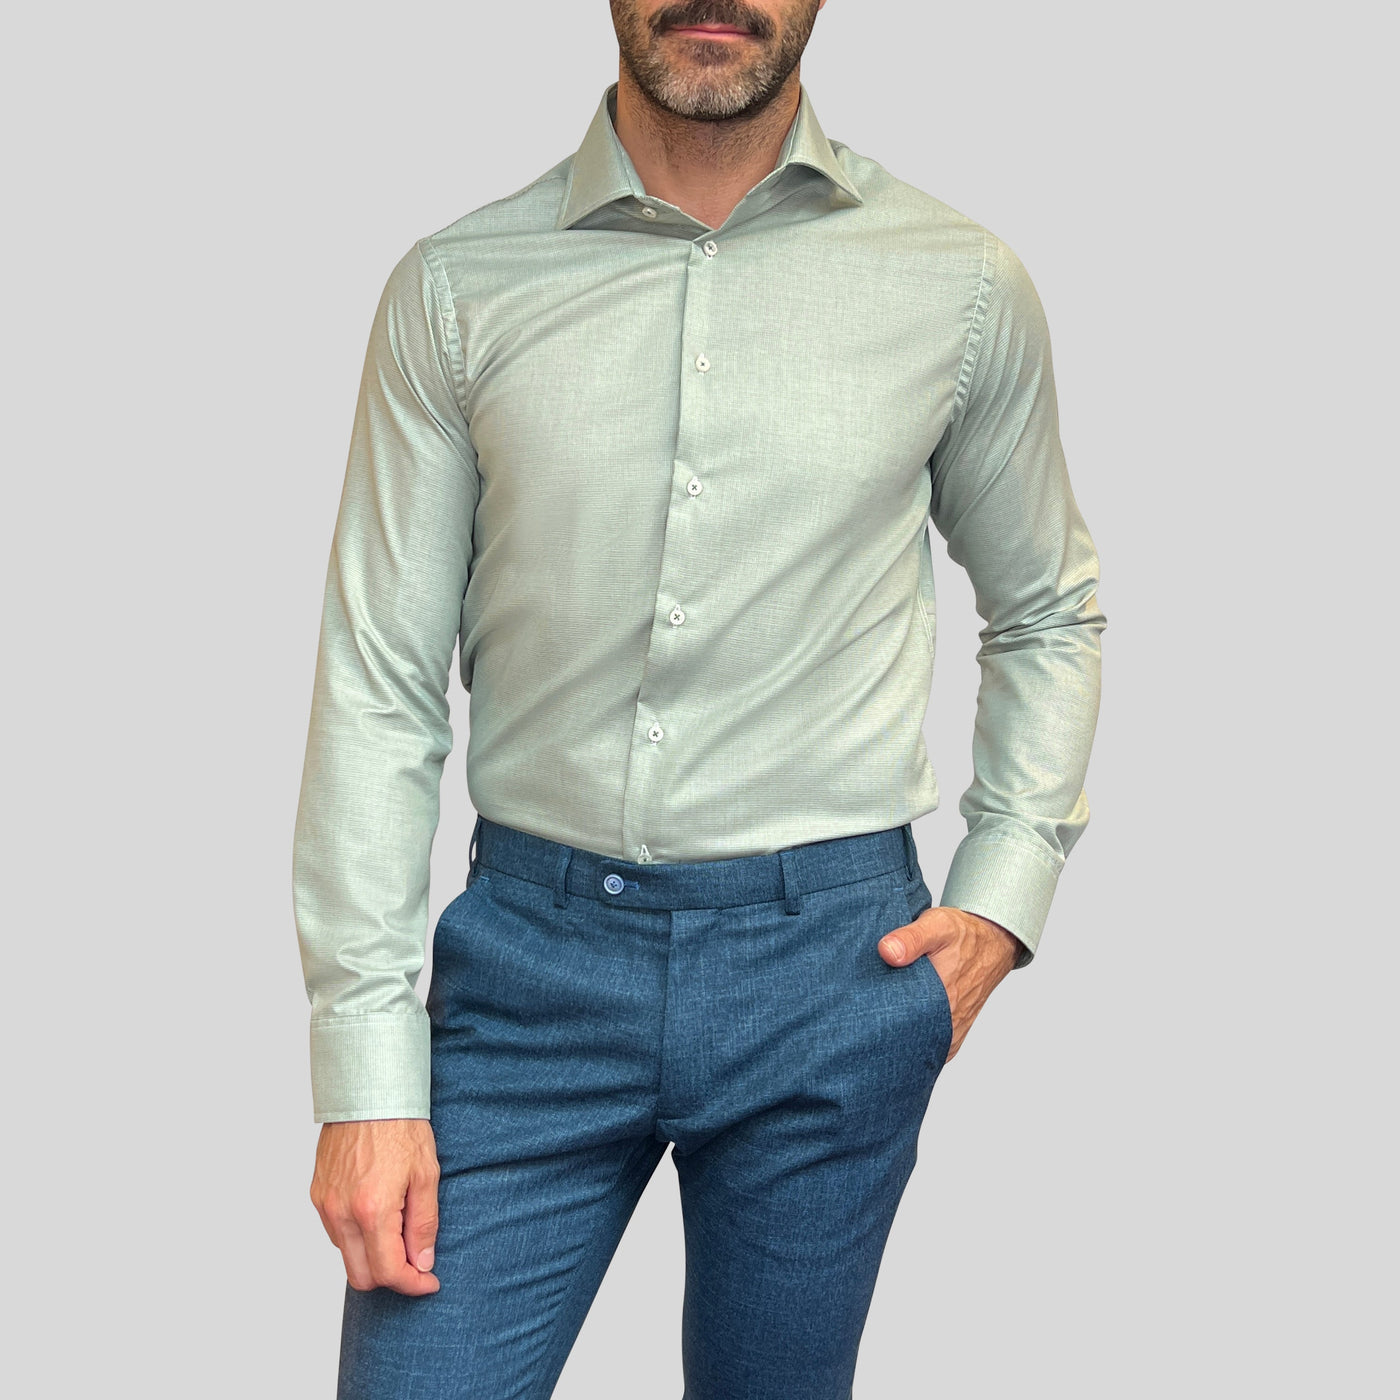 Gotstyle Fashion - Oscar Of Sweden Collar Shirts Micro Squares Shirt - Green